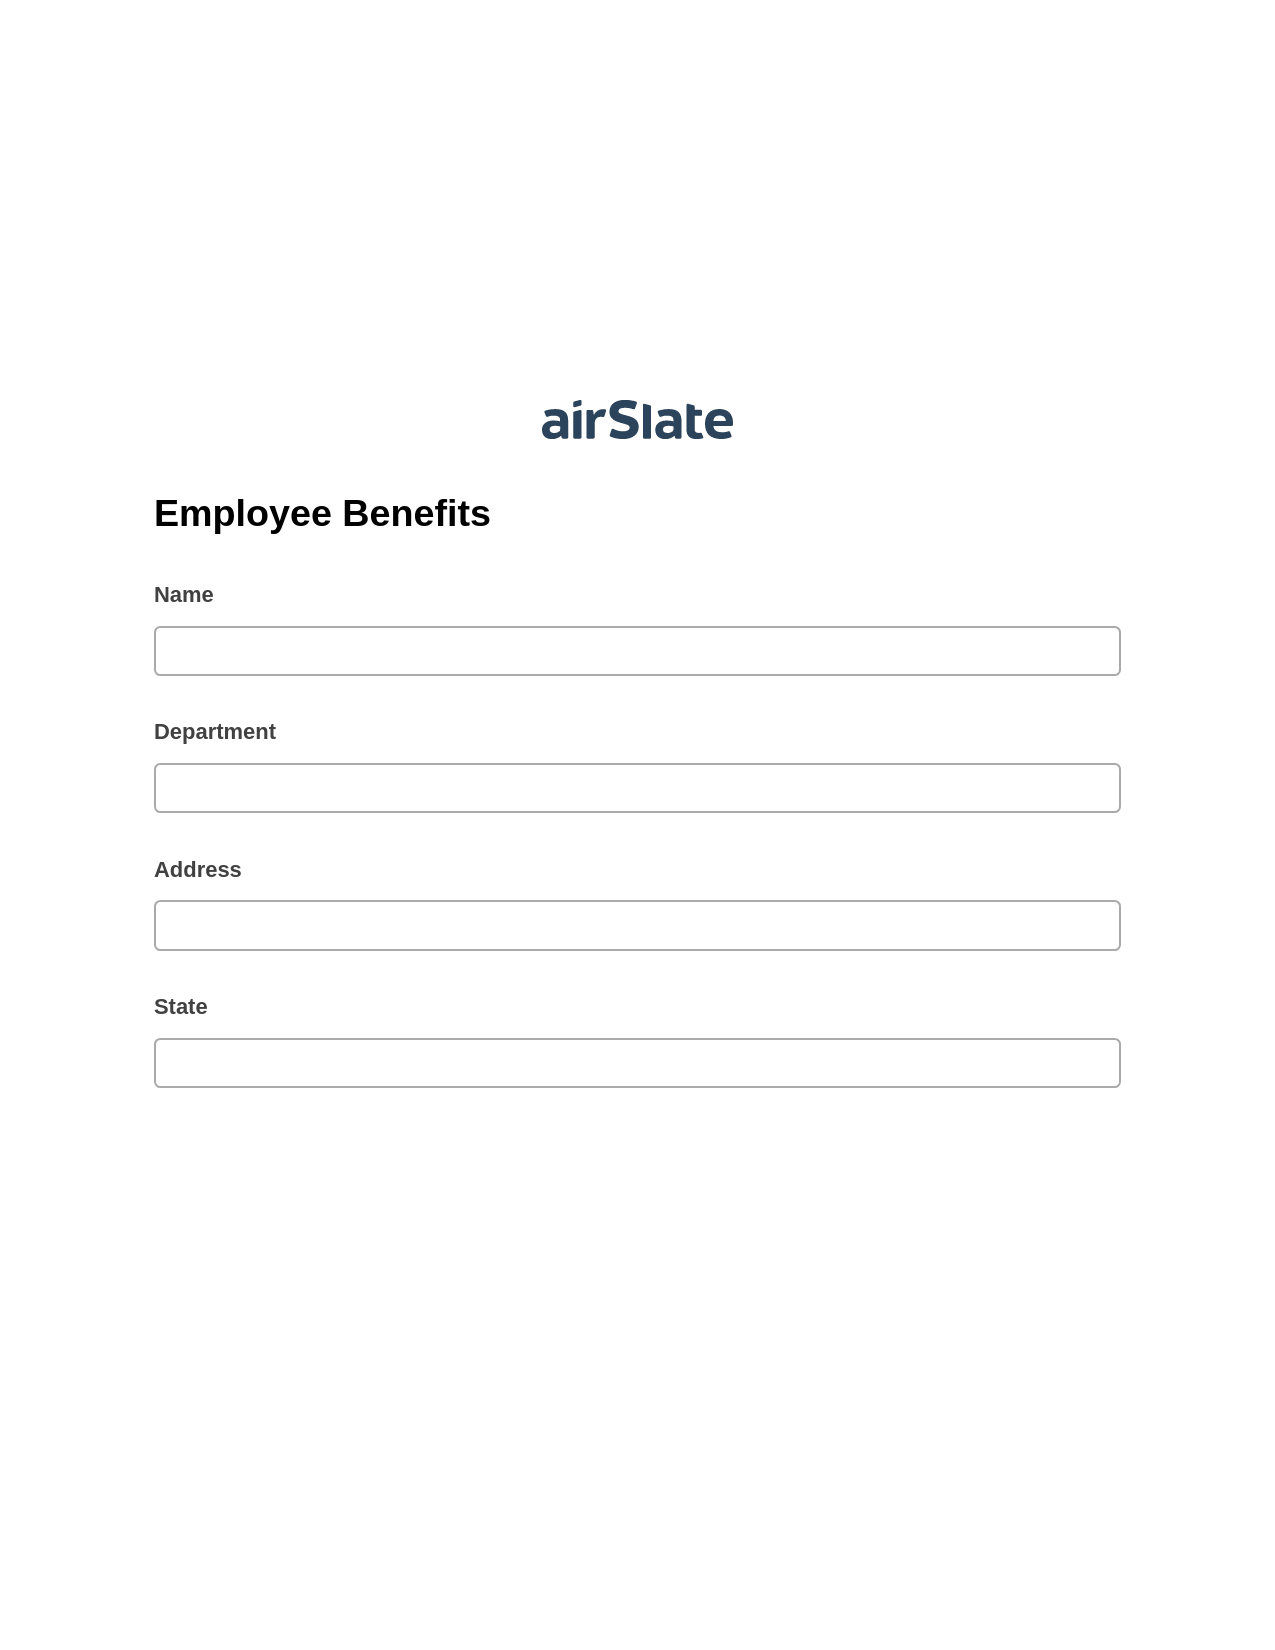 Employee Benefits Pre-fill Slate from MS Dynamics 365 Records Bot, Google Sheet Two-Way Binding Bot, Slack Two-Way Binding Bot